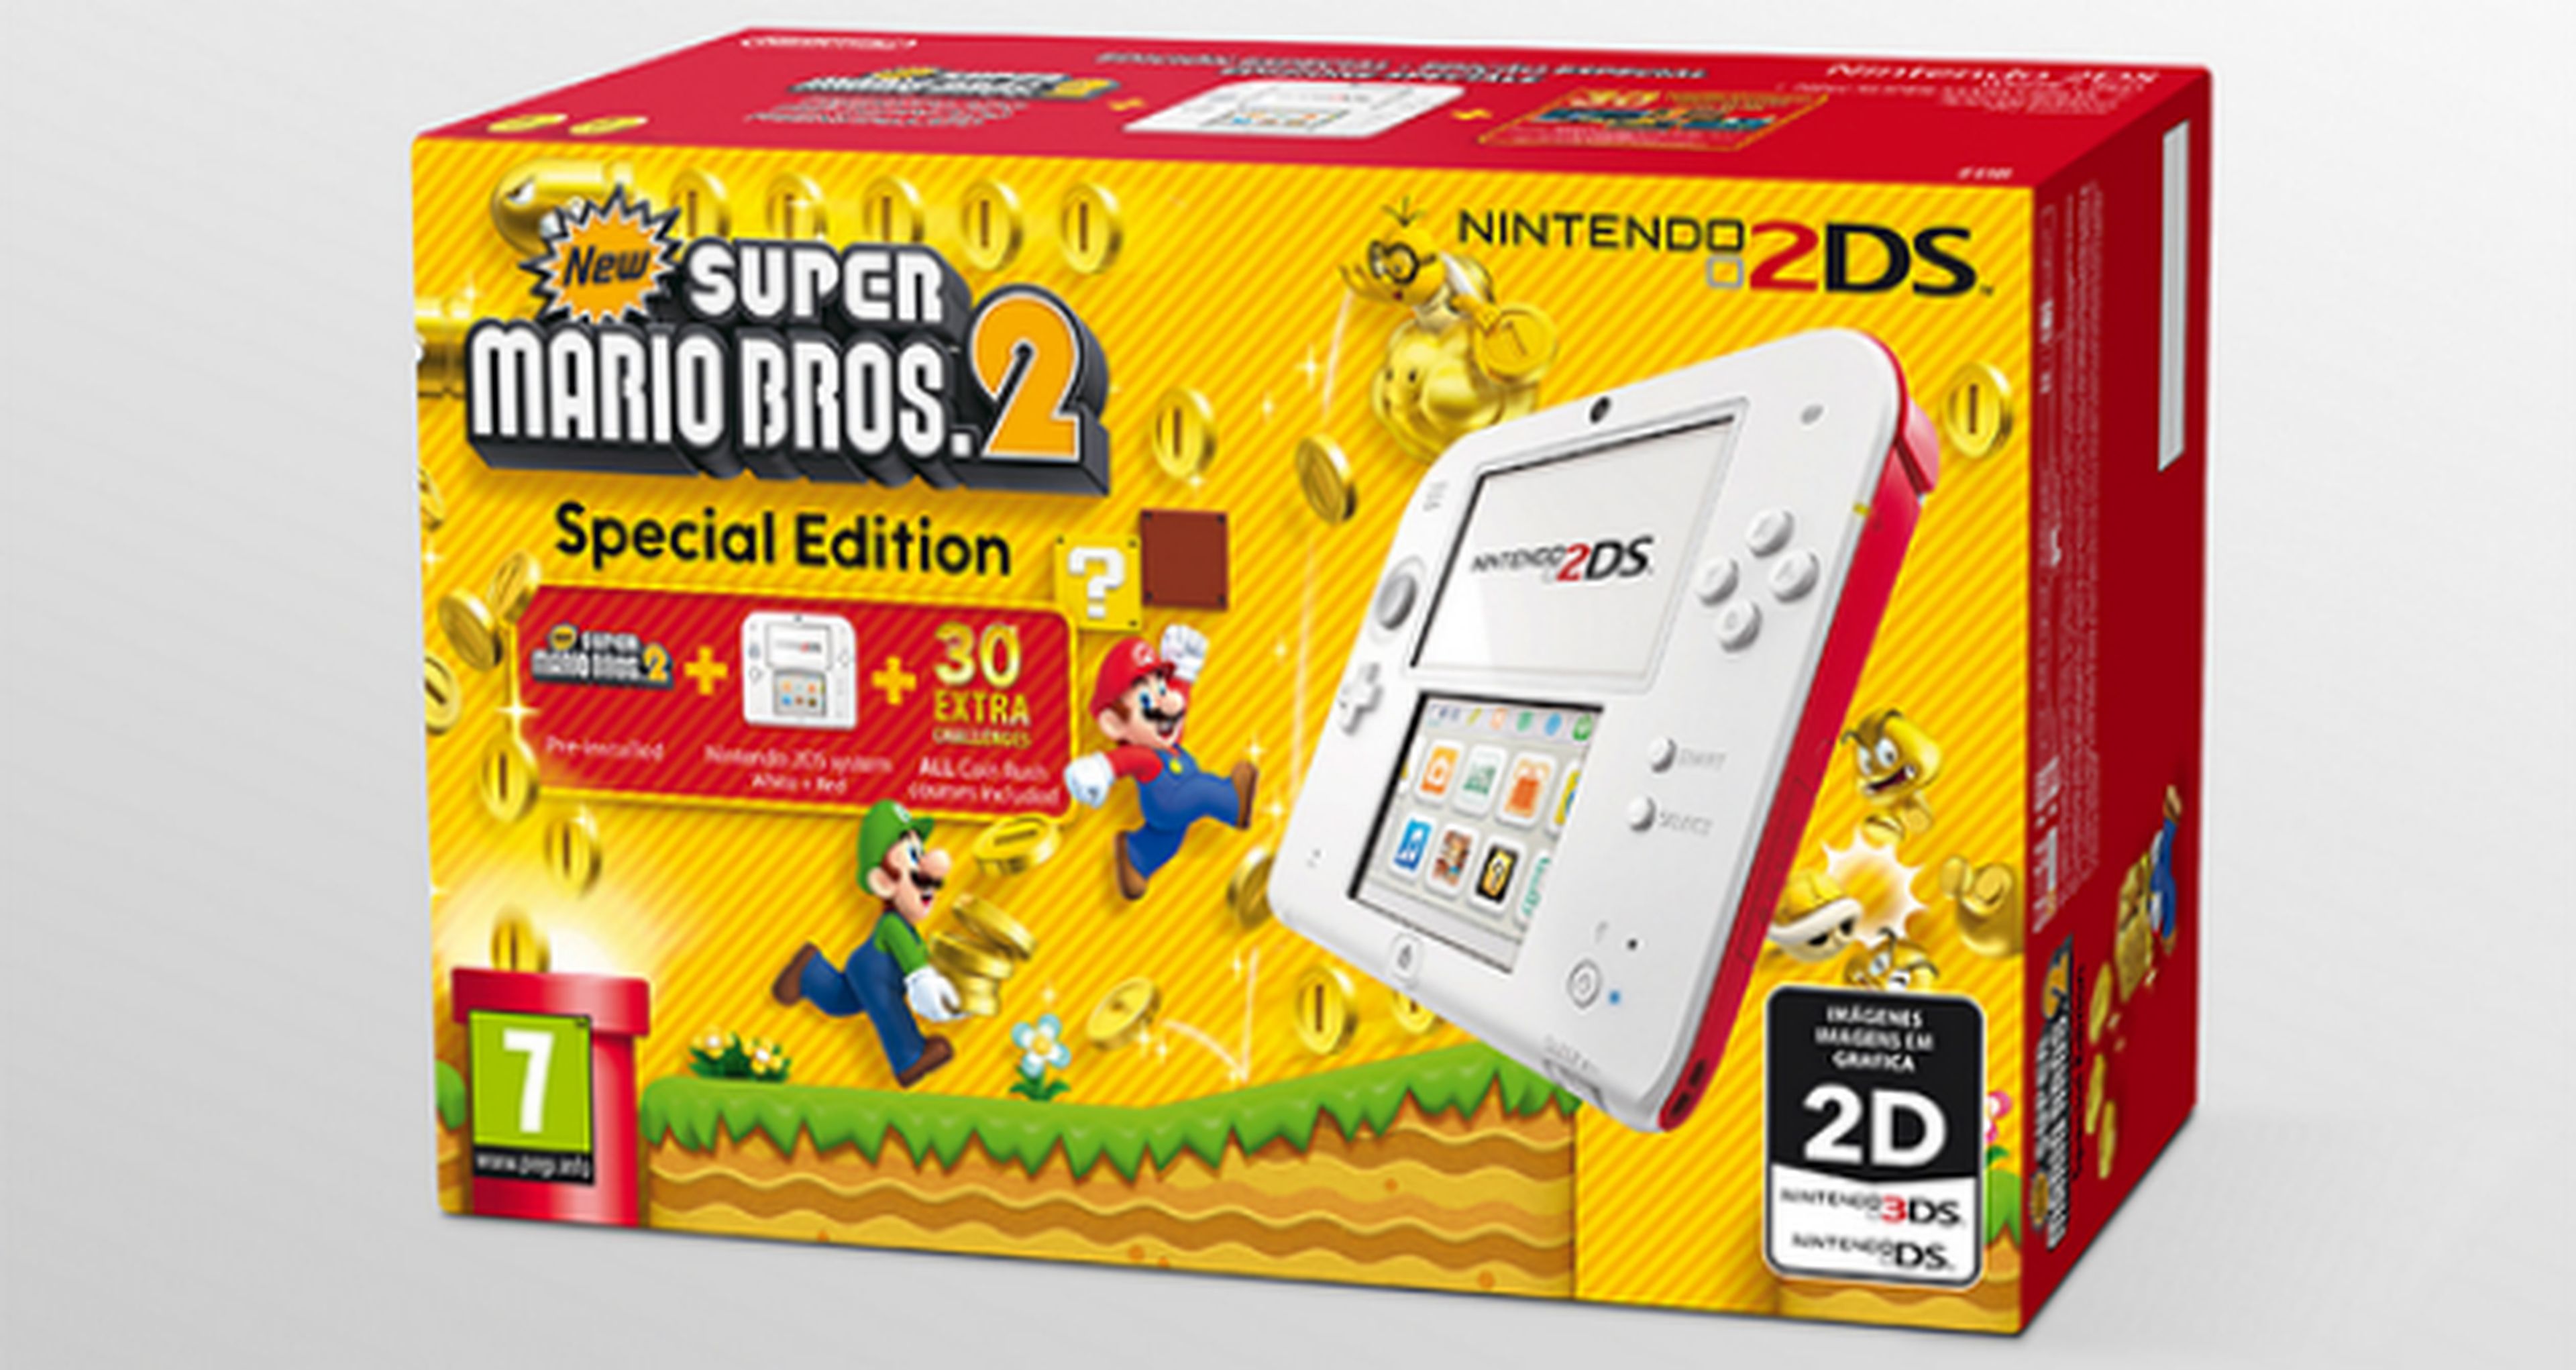 Pack Nintendo 2DS New Super Mario Bros. 2 Special Edition